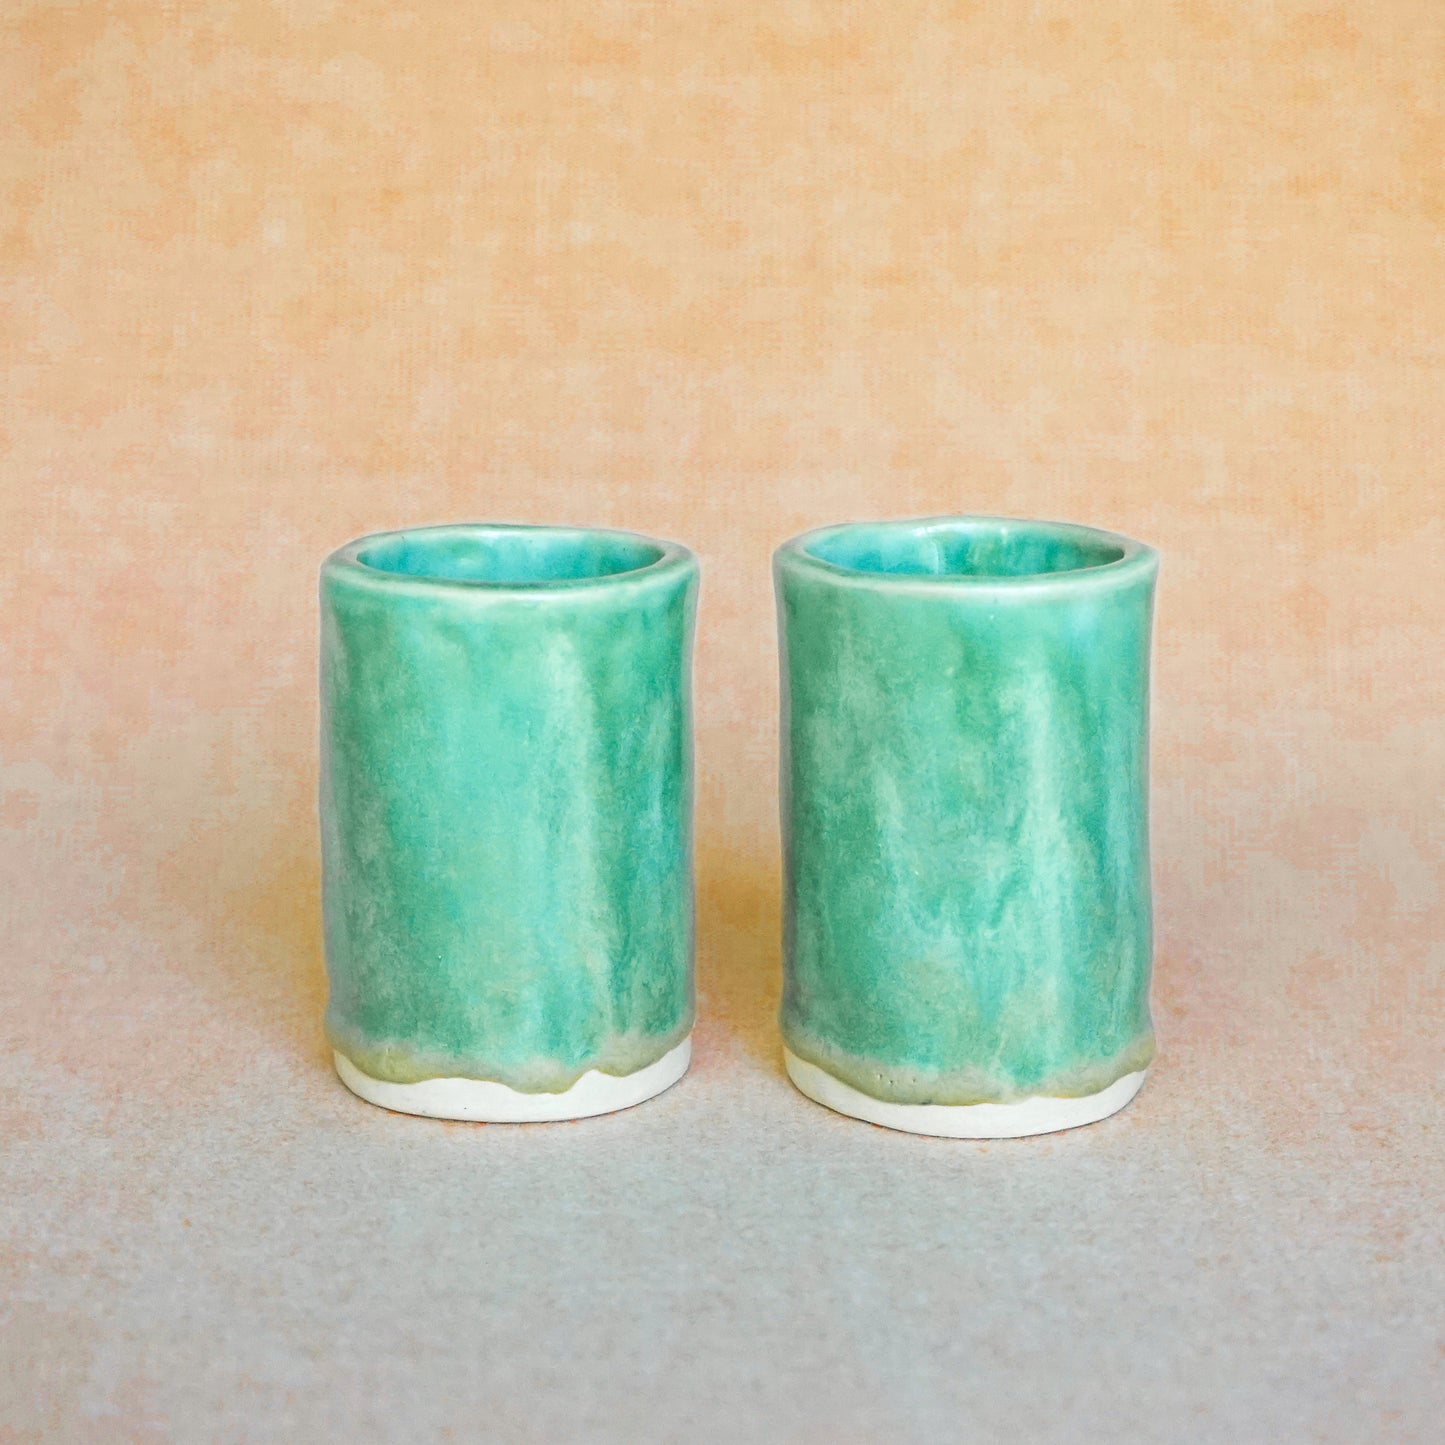 The Jade Sake Cup Set-Preorder Now